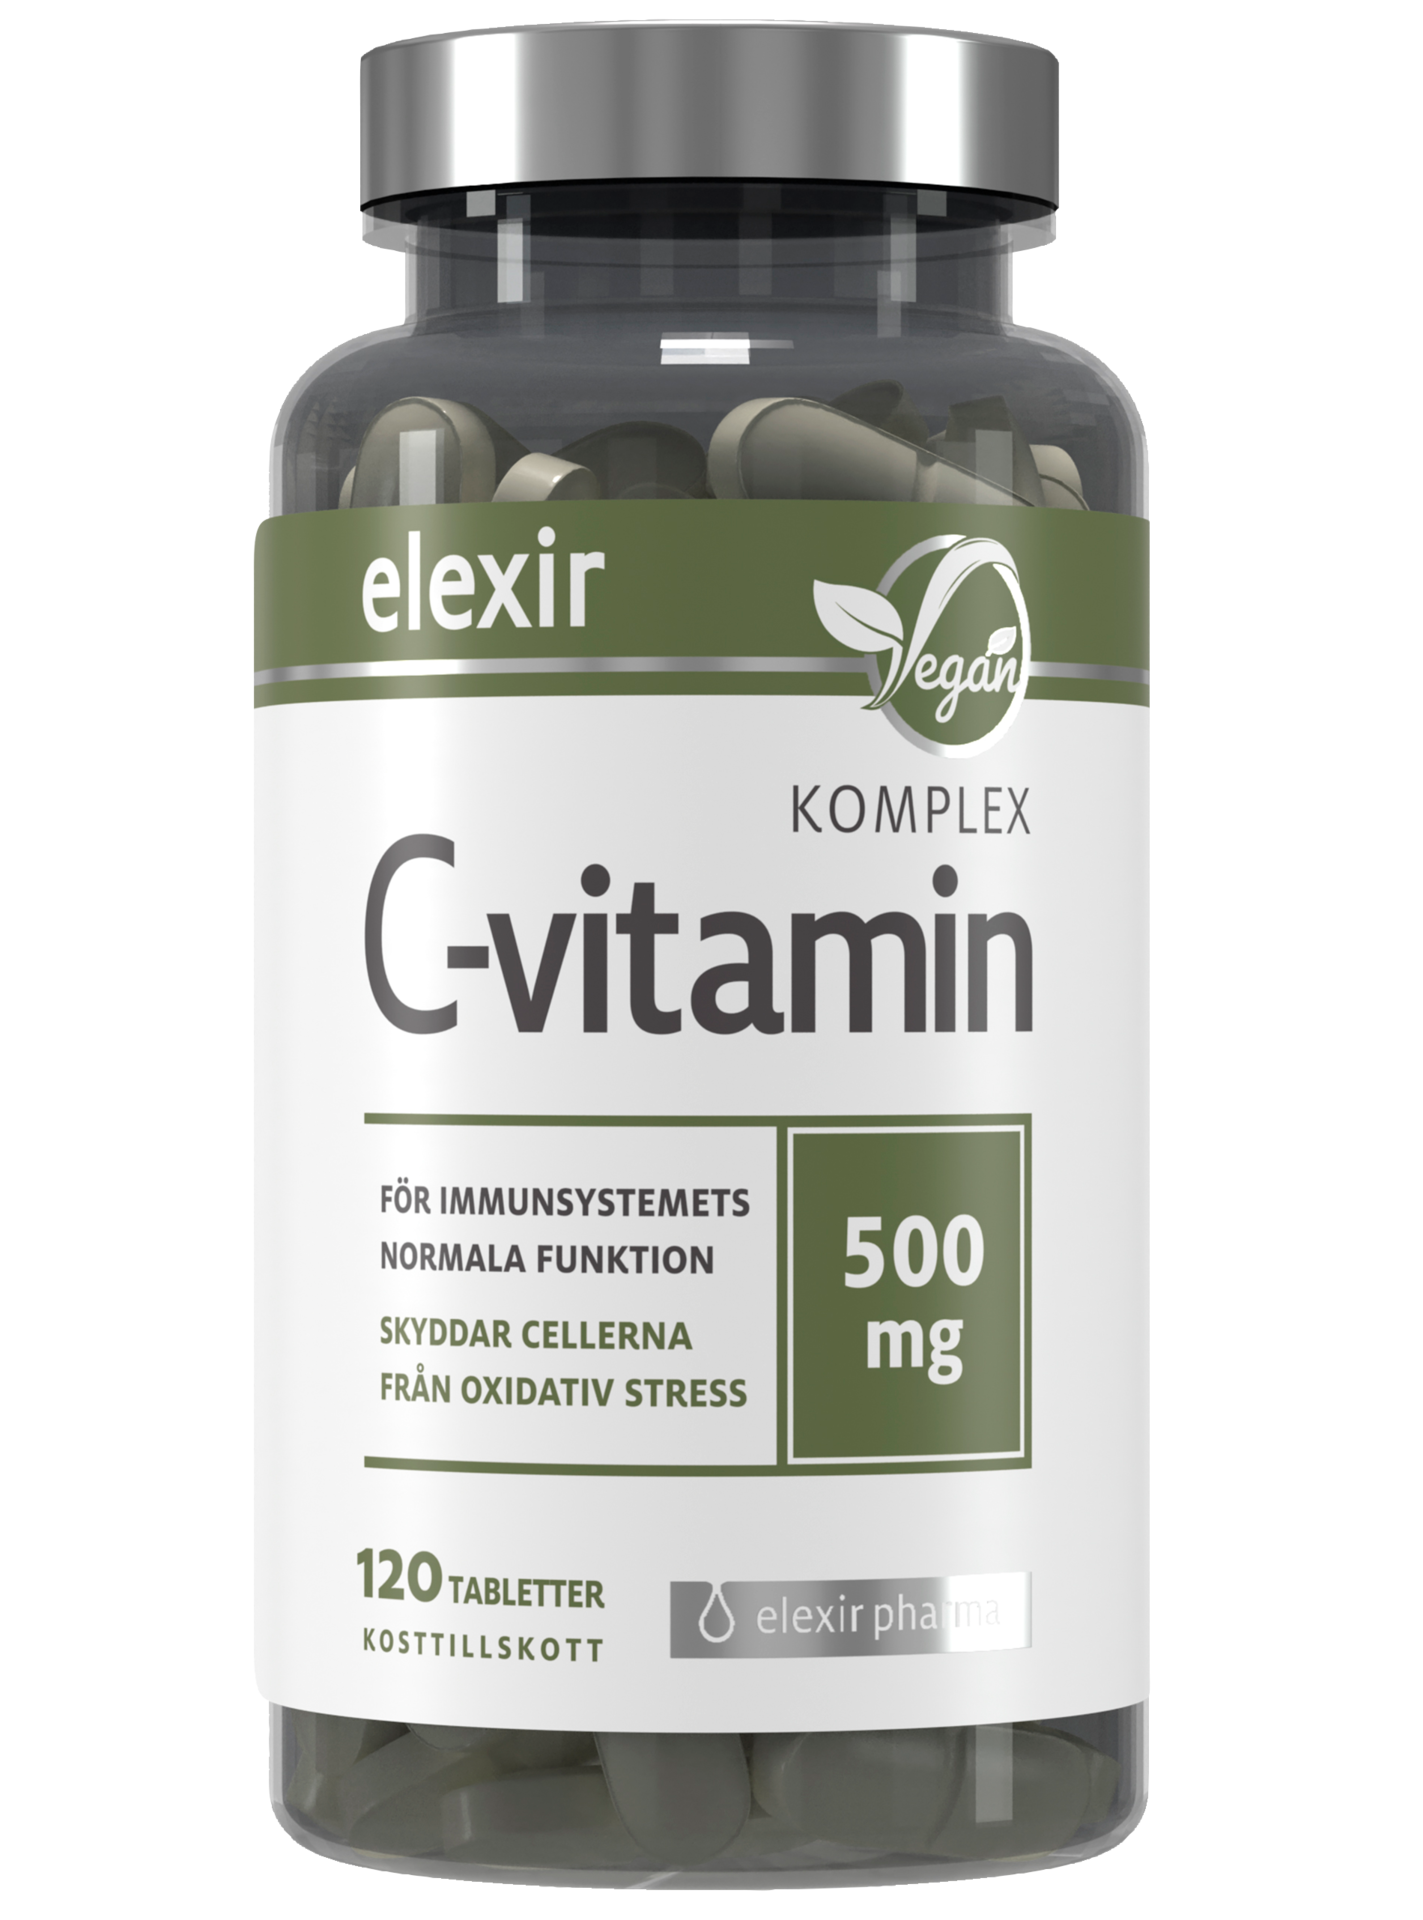 Elexir Kosttillskott C-vitamin 120 tabletter